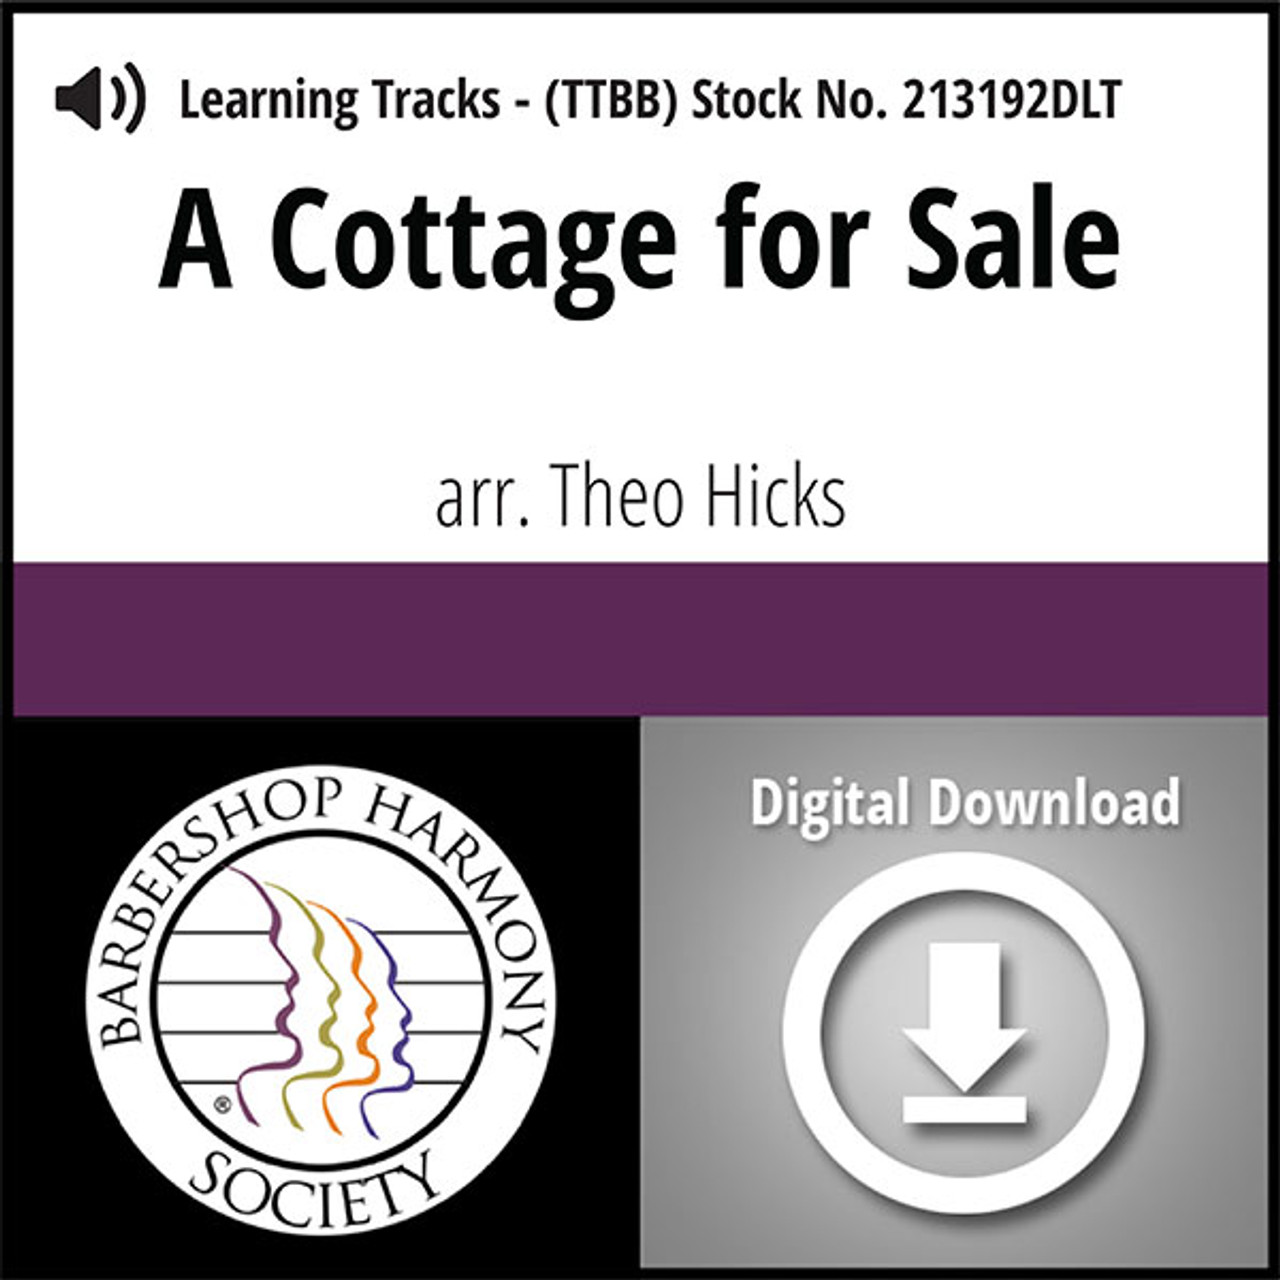 A Cottage for Sale (TTBB) (arr. Theo Hicks) - Digital Tracks for 213191